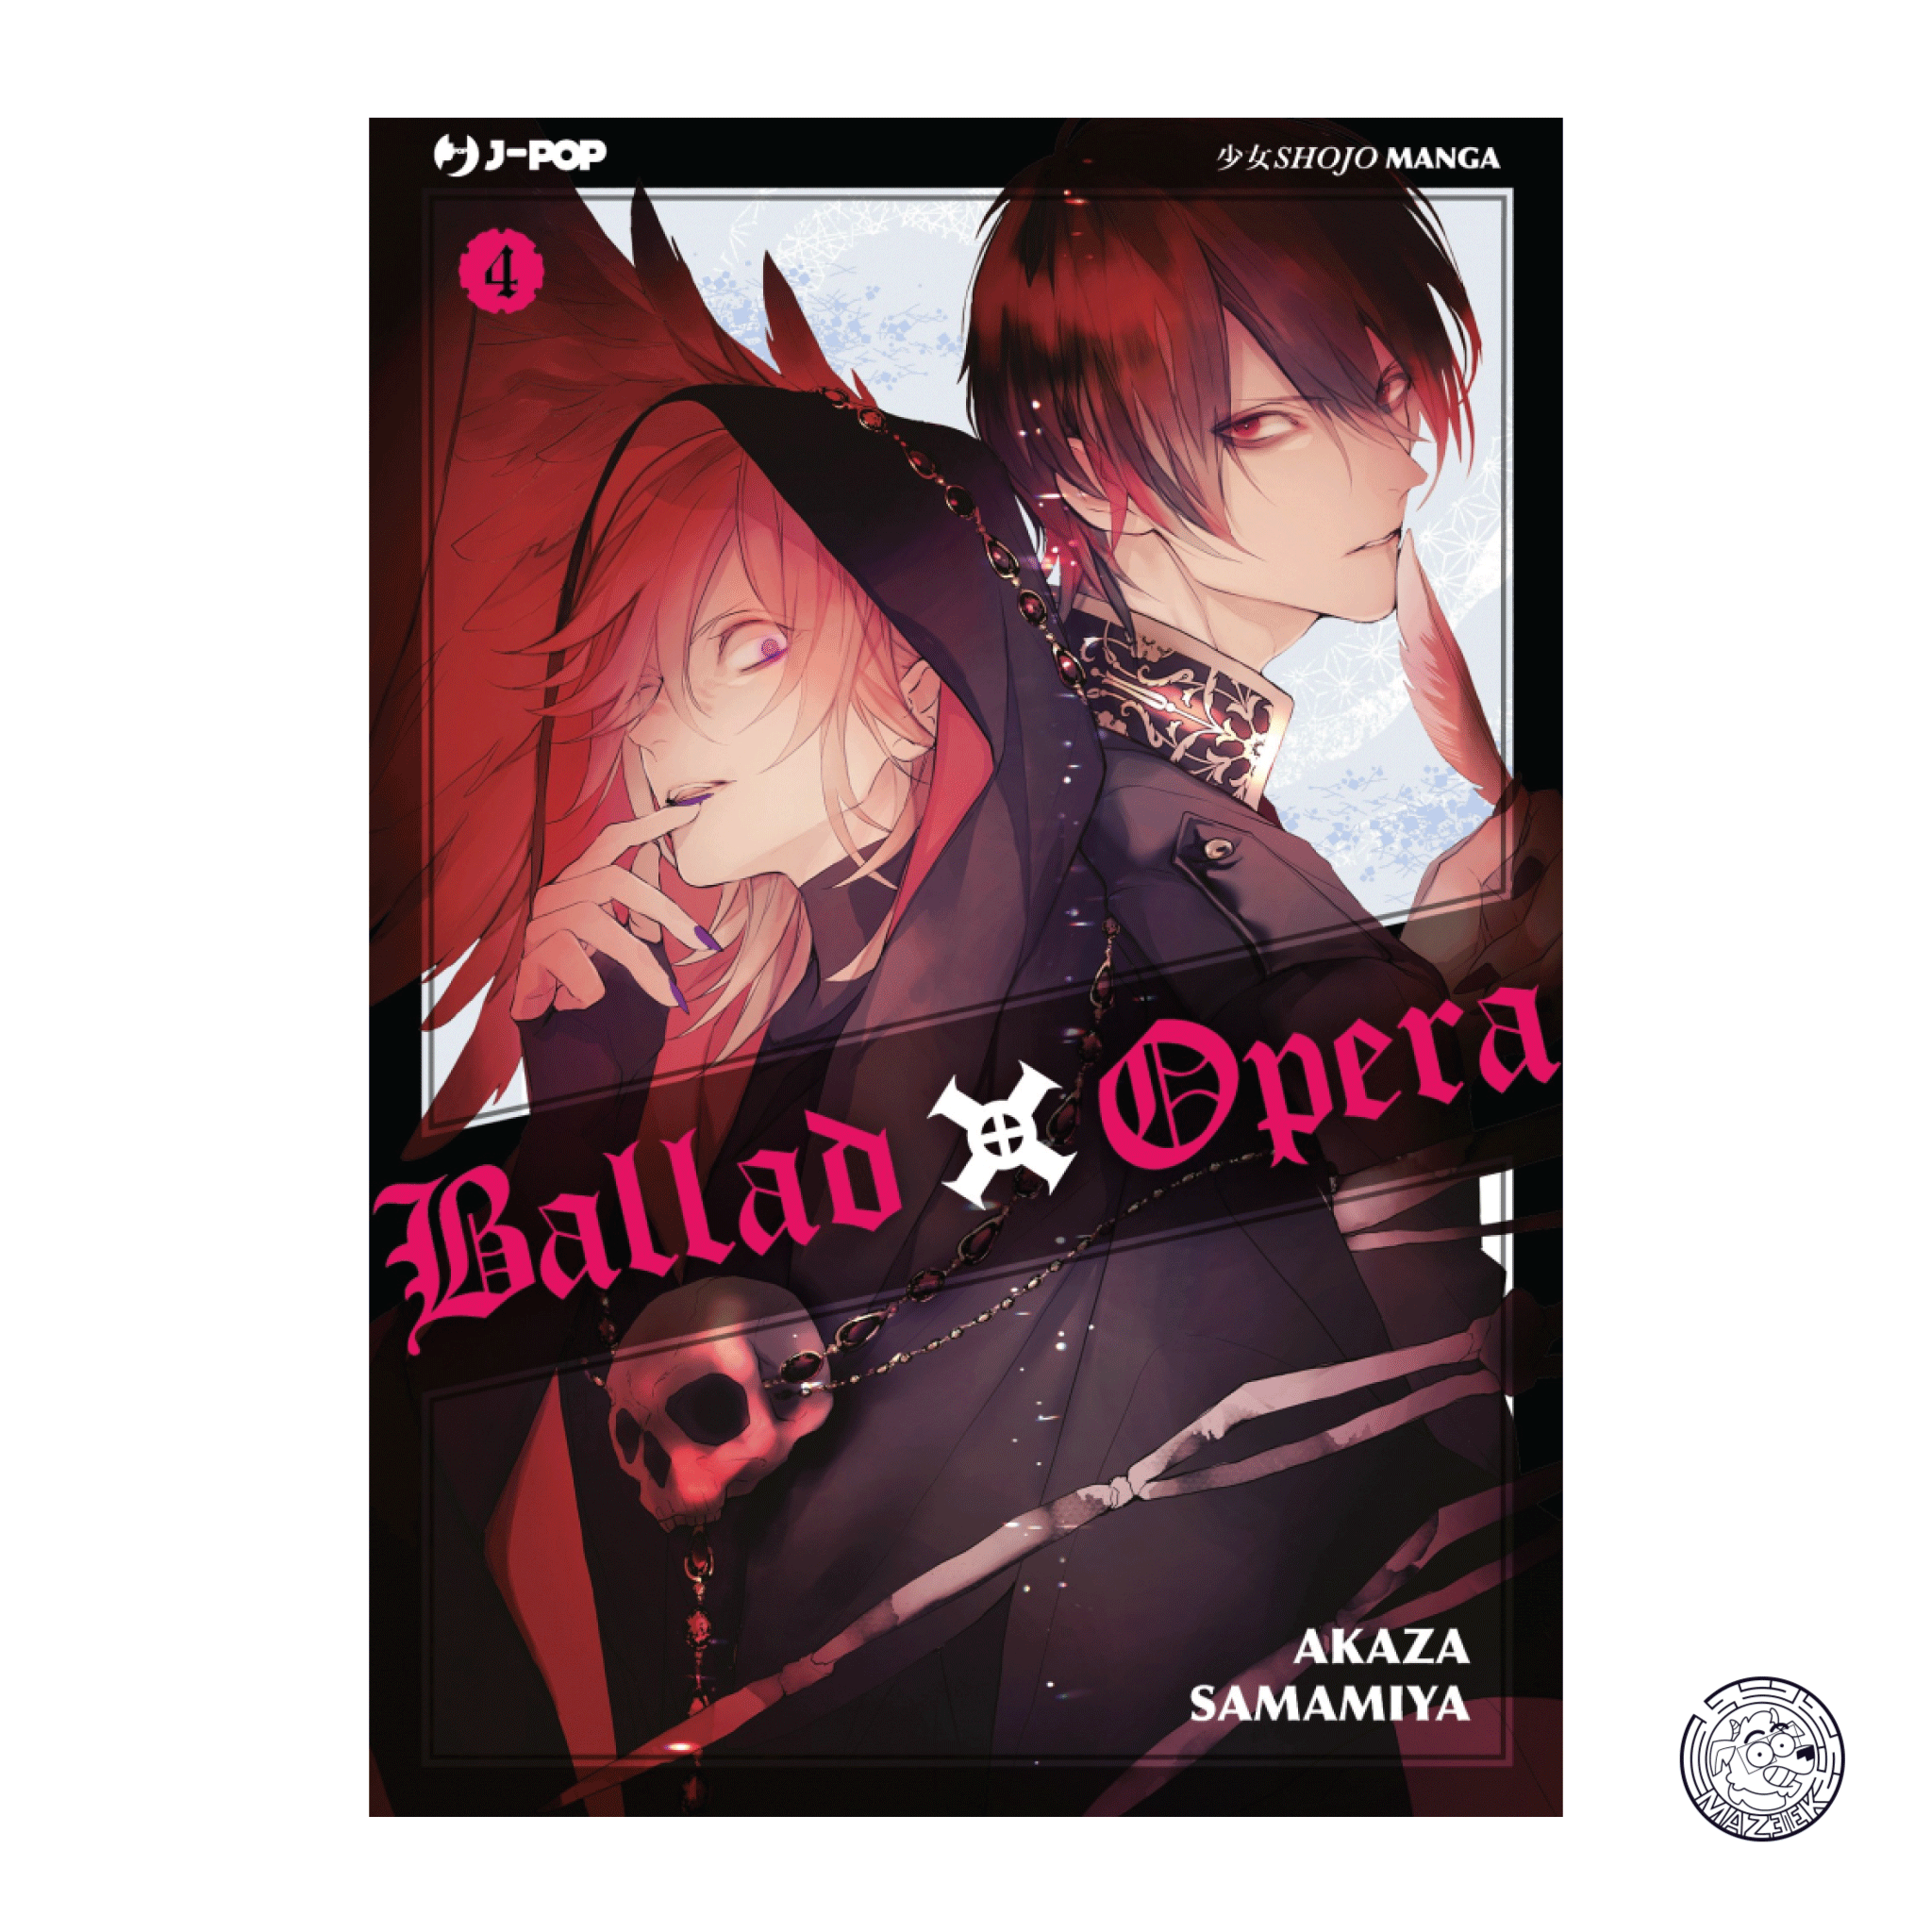 Ballad X Opera 04